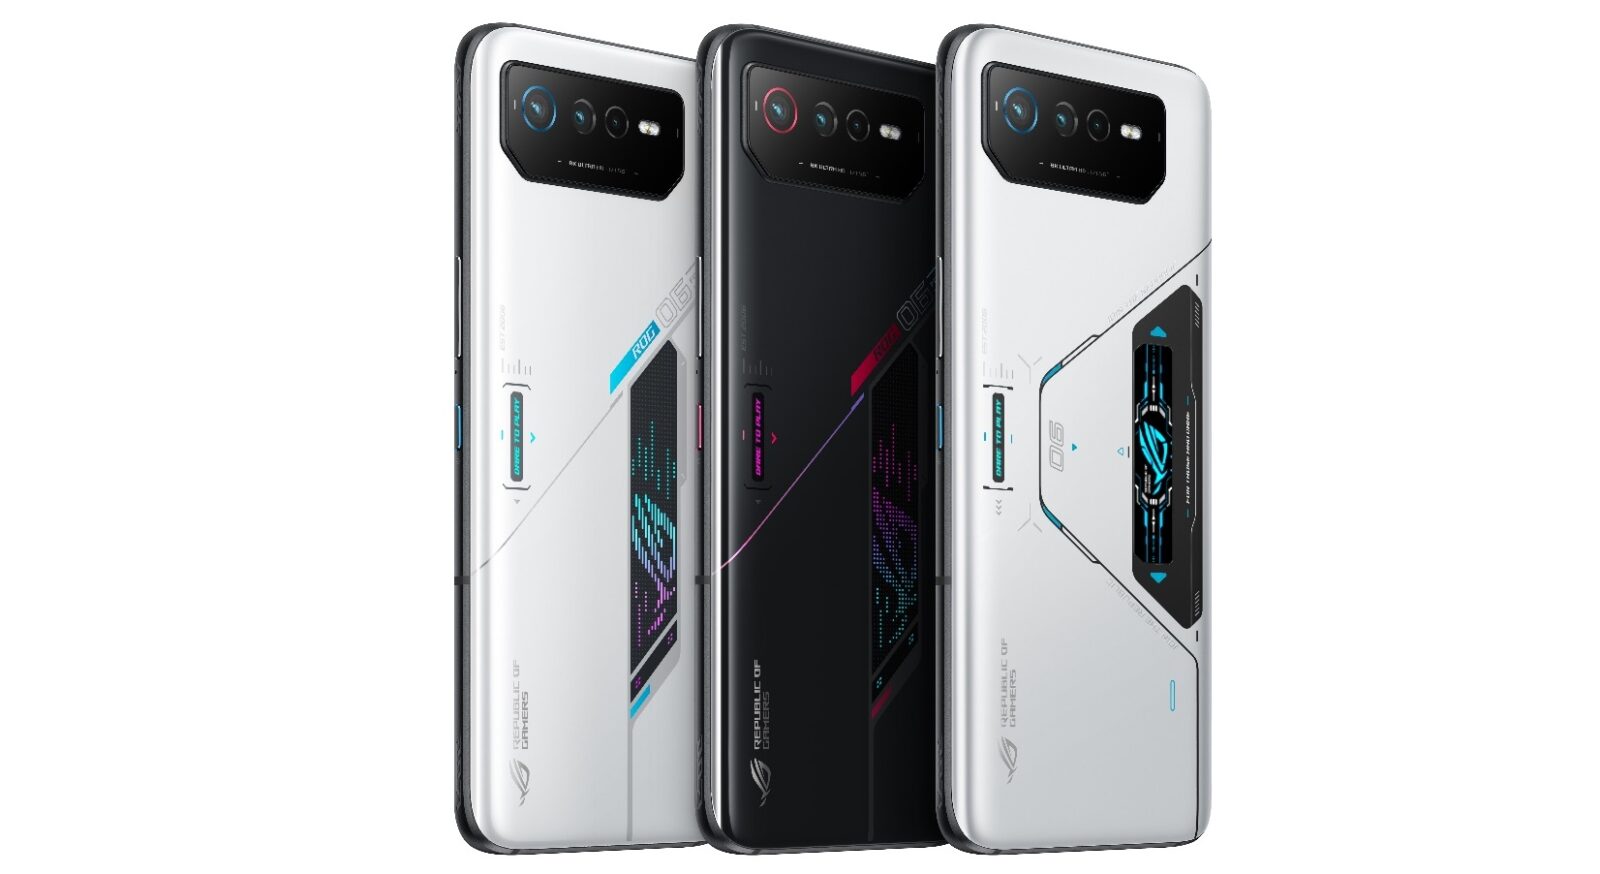 image001 1 | AeroActive Cooler 6 |  ASUS เปิดตัว ROG Phone 6 และ ROG Phone 6 Pro เกมมิ่งสมาร์ทโฟนที่แรงที่สุดในโลกด้วยหน่วยประมวลผล Qualcomm Snapdragon 8+ Gen 1